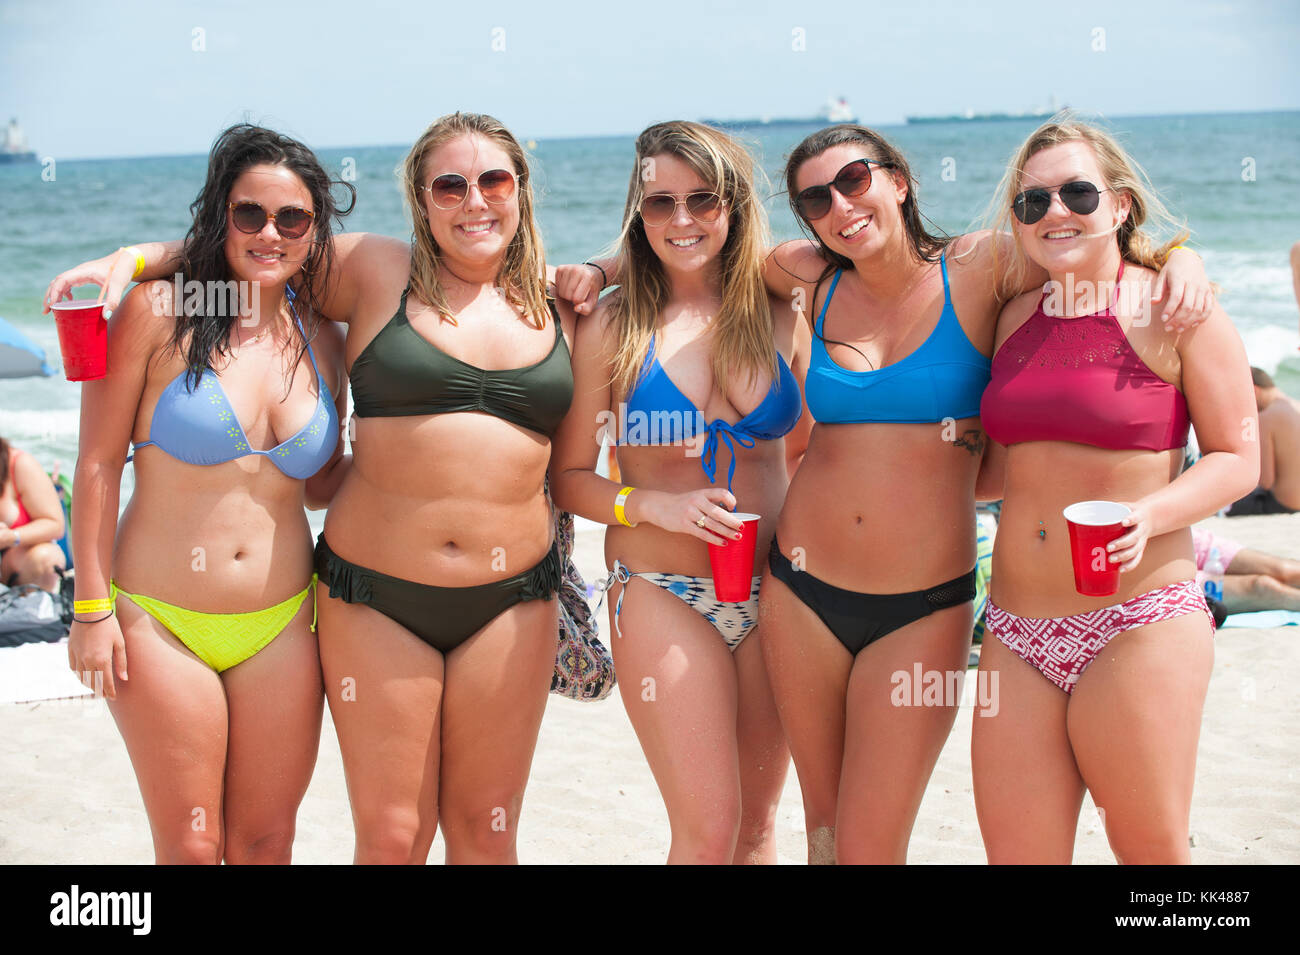 Chubby girls in very tiny bikinis